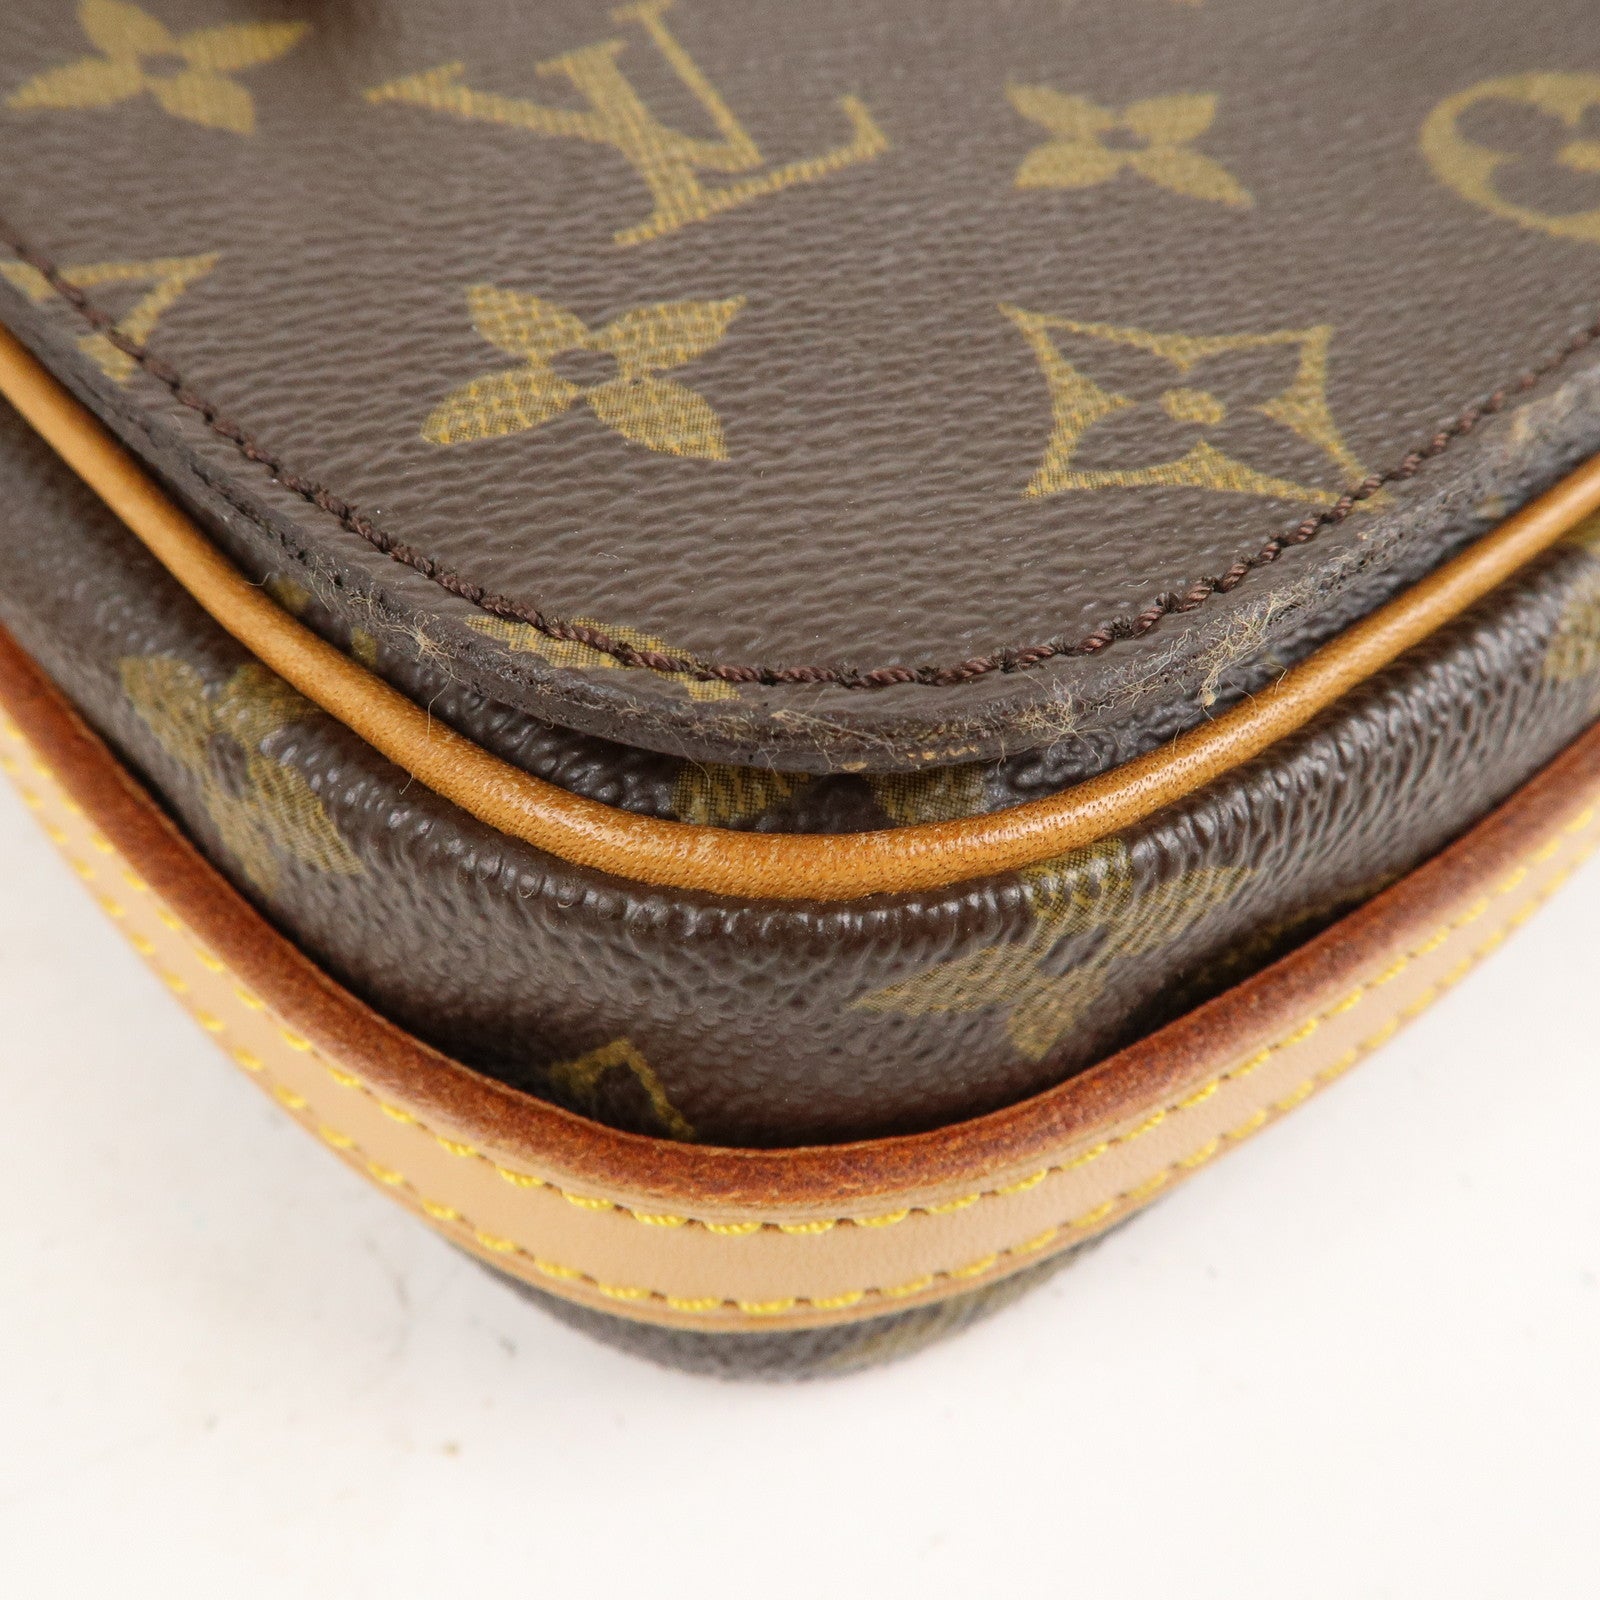 Louis-Vuitton-Monogram-Saint-Germain-24-Shoulder-Bag-M51210